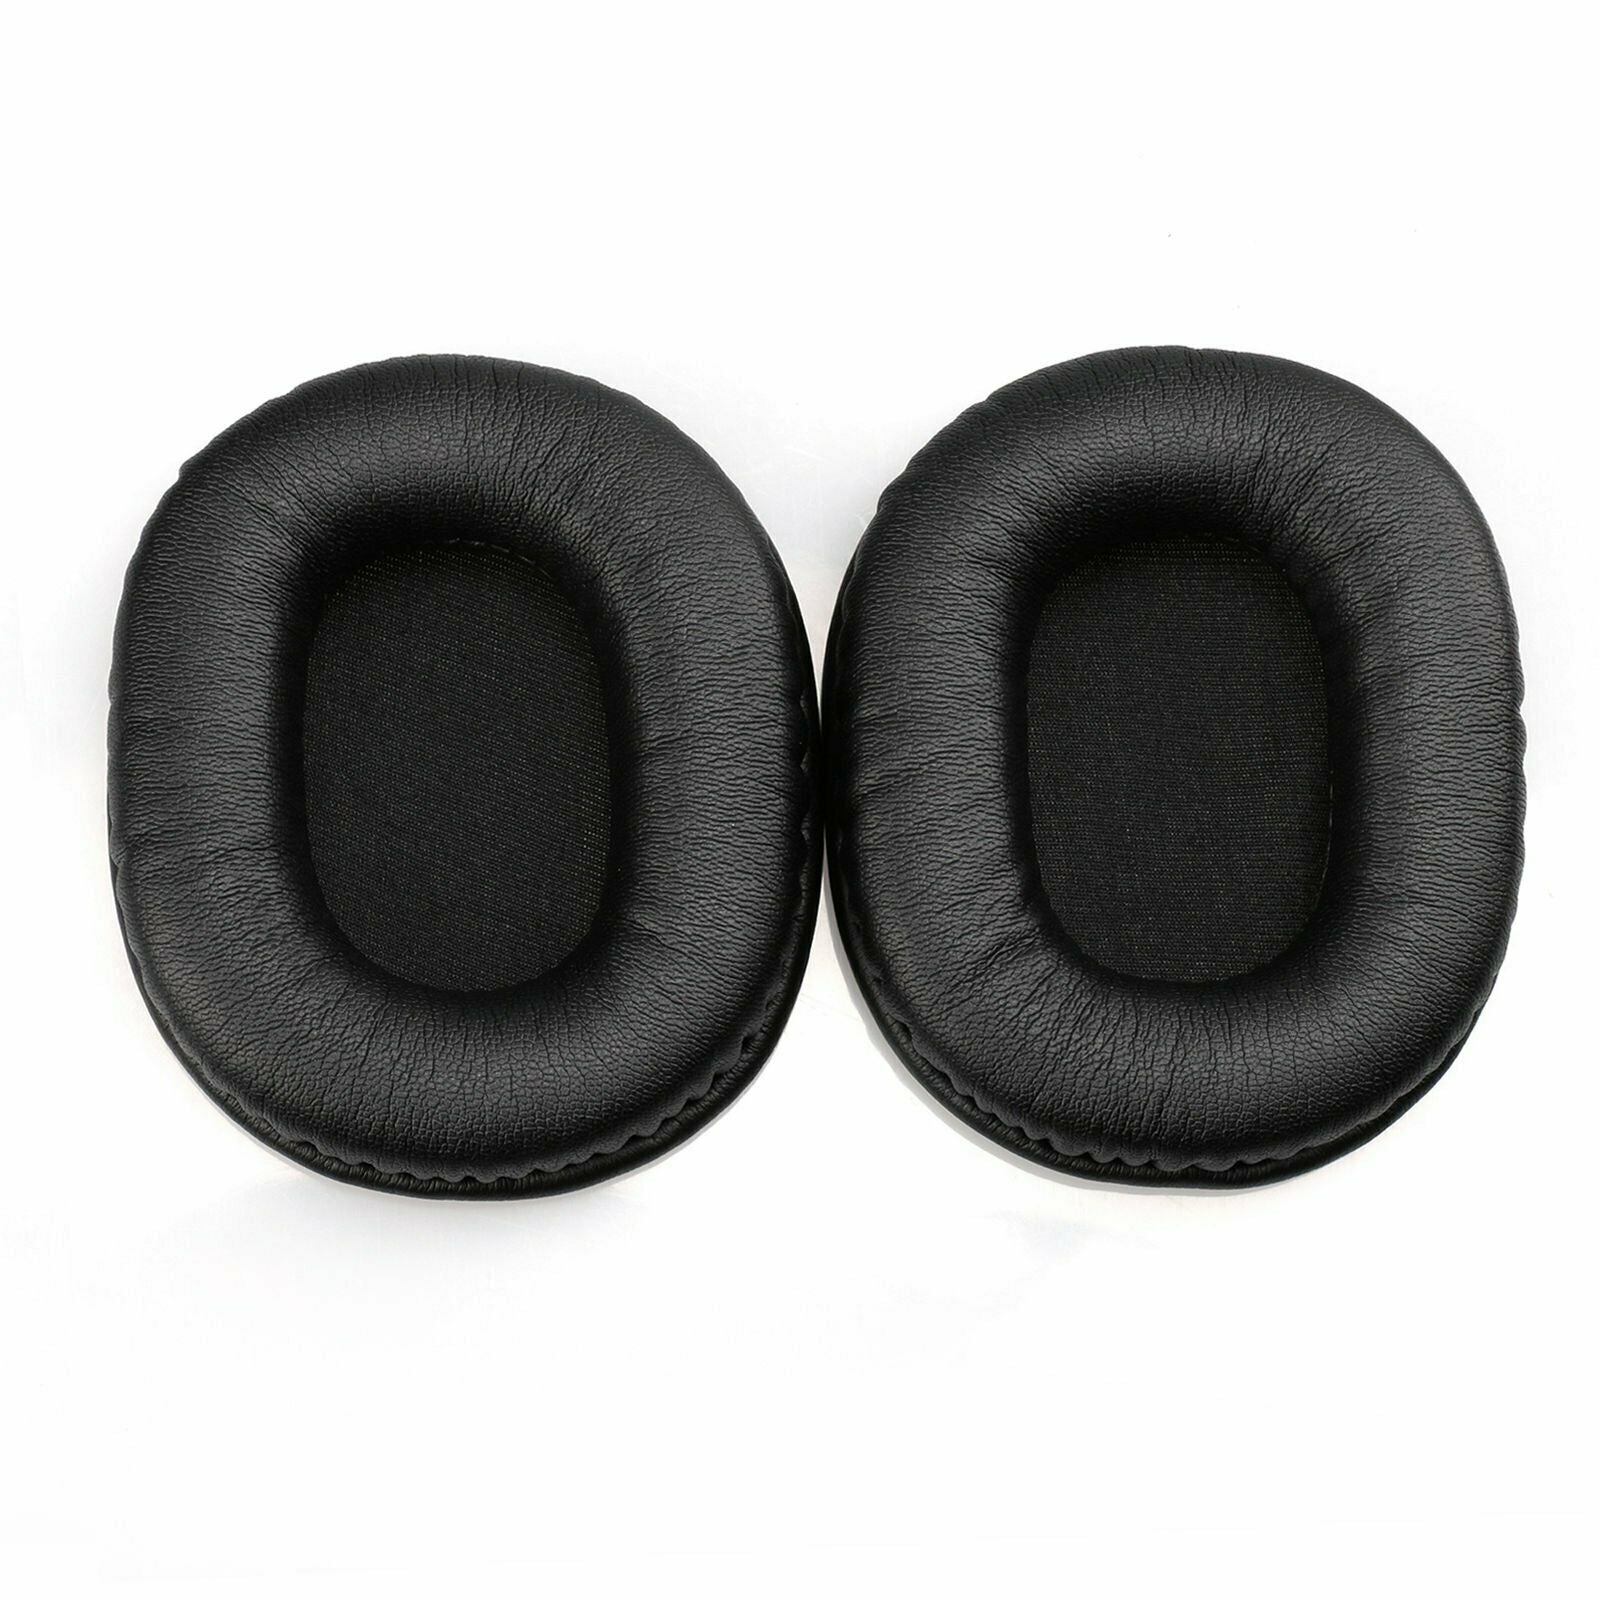 Replacement 2Pcs Ear Pads For Audio-technica ATH-M40x M50S M20 M30/40 Headphones